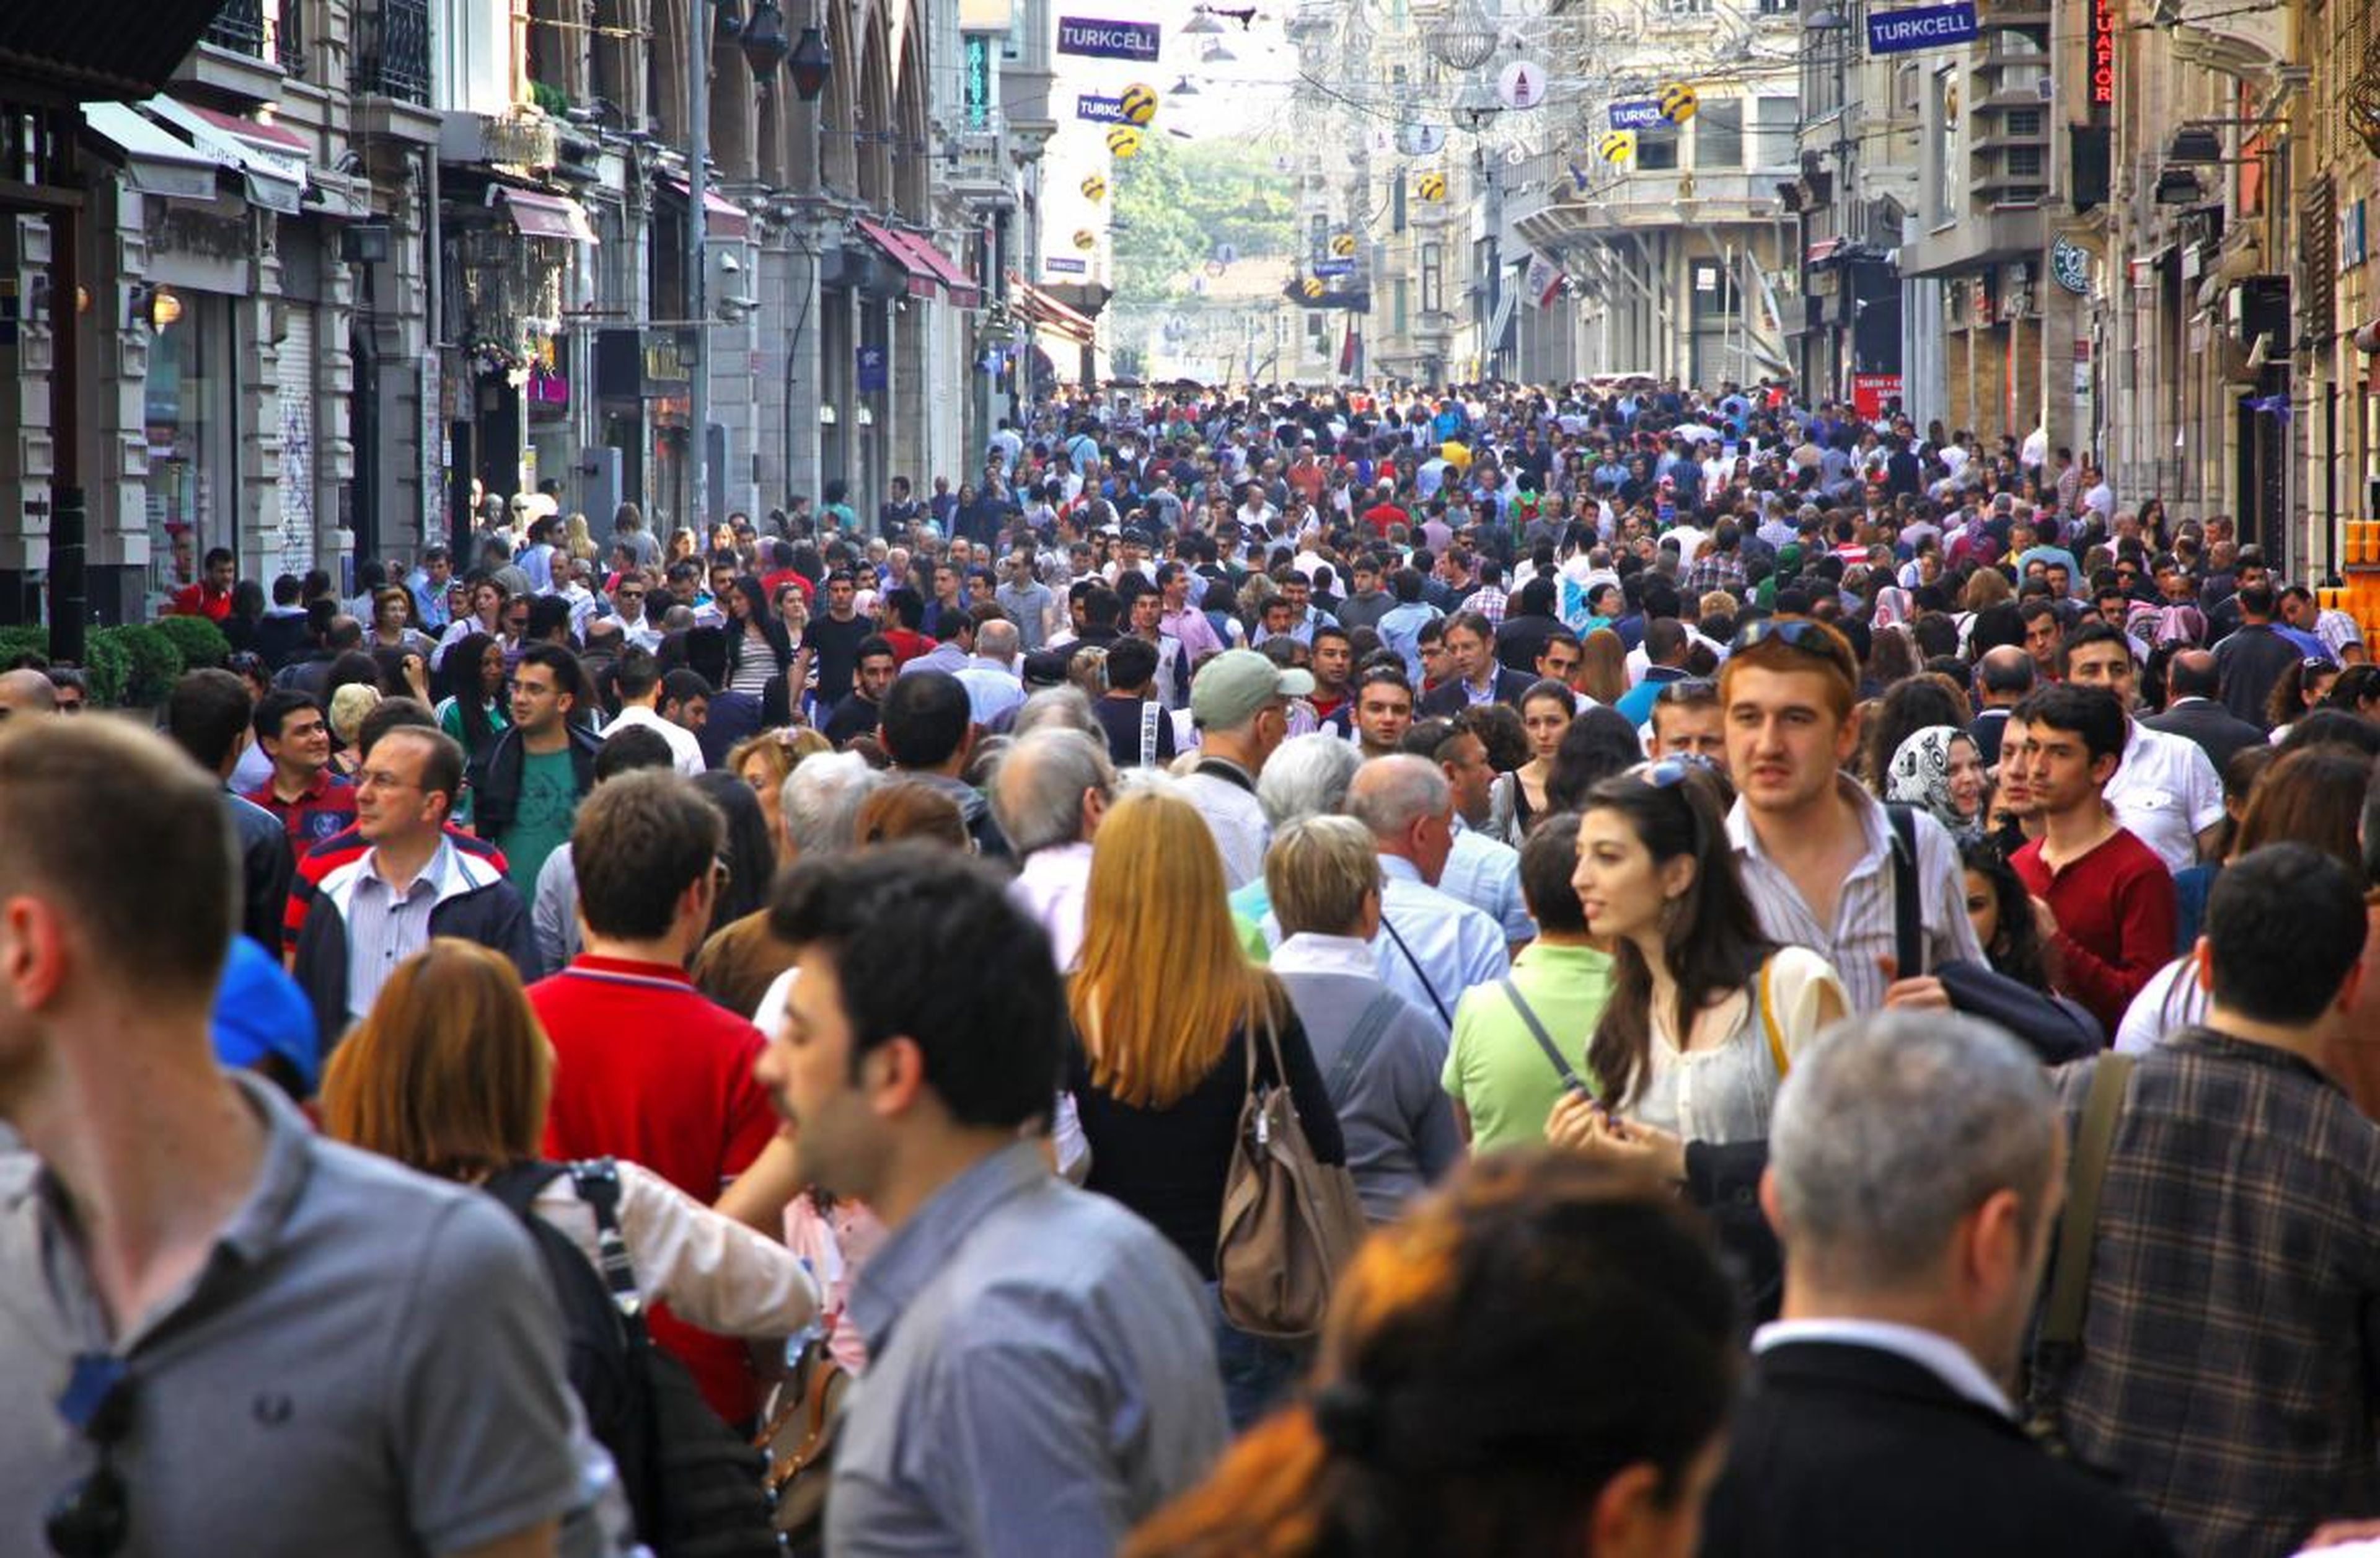 Crowded street. Толпа людей в городе. Много людей в городе. Многолюдные места. Люди на улице.